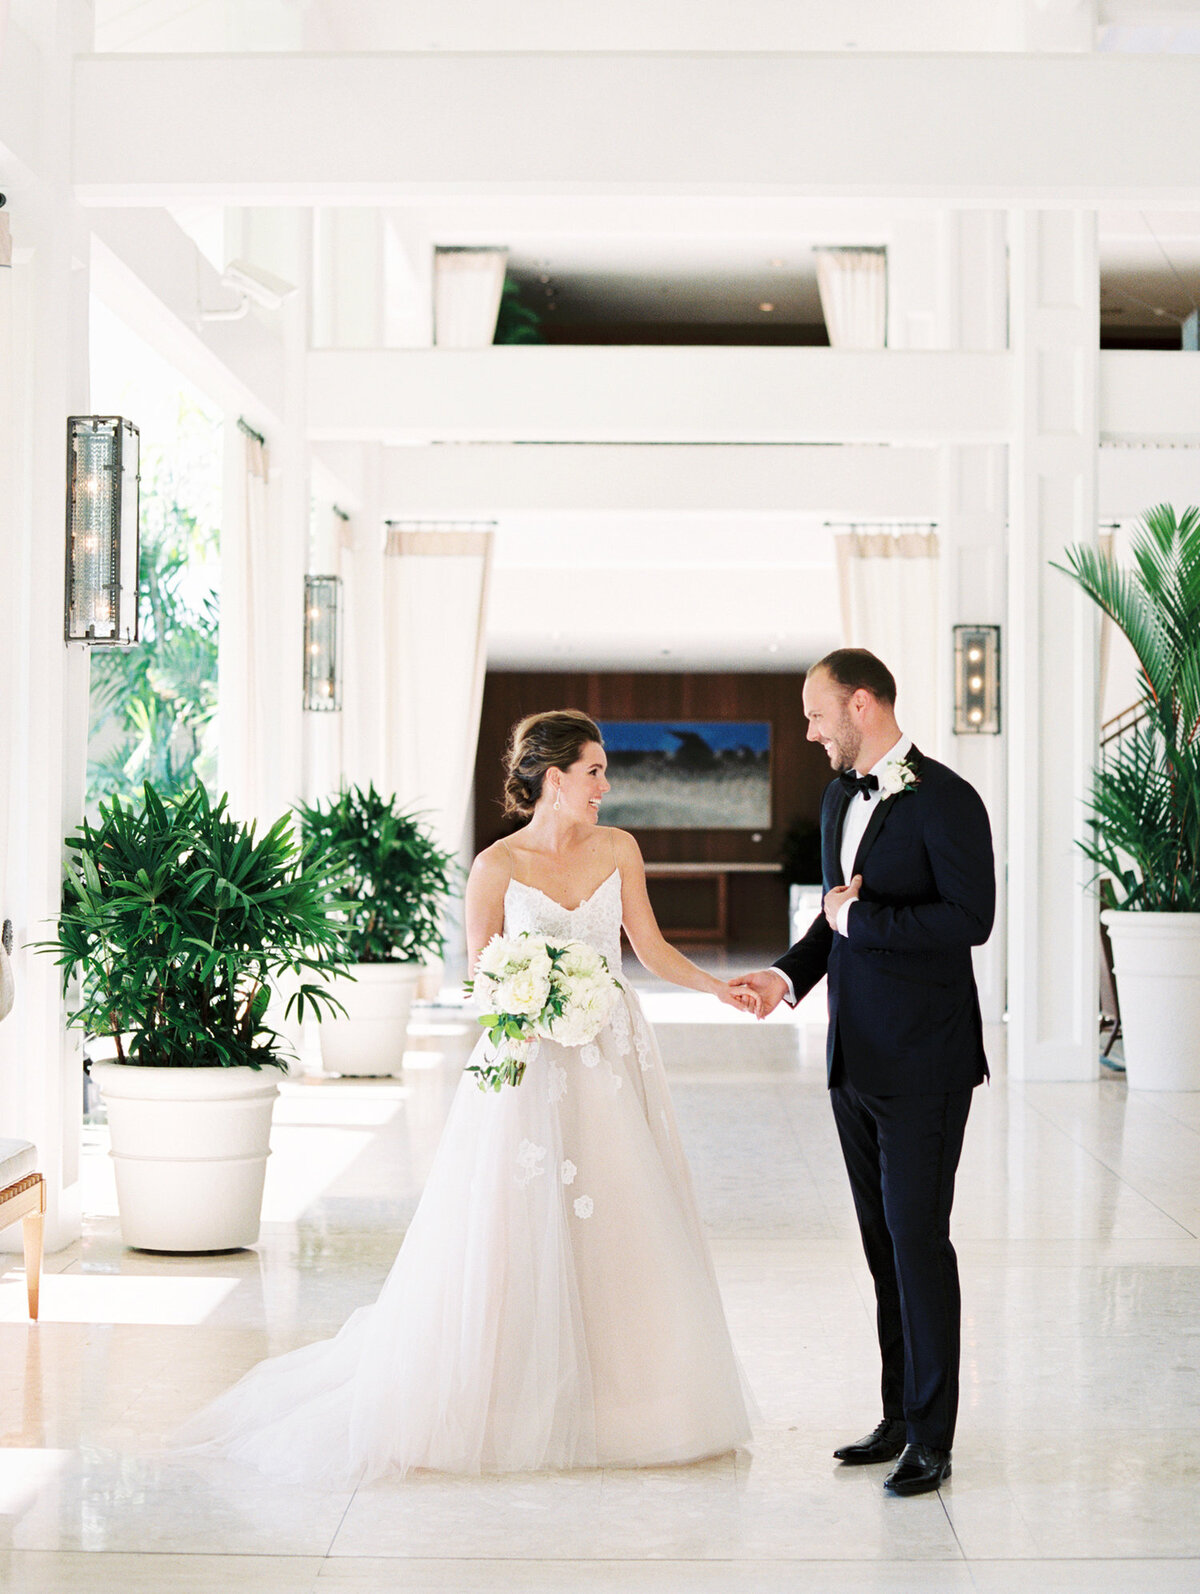 Jacqui + Luc | Hawaii Wedding & Lifestyle Photography | Ashley Goodwin Photography